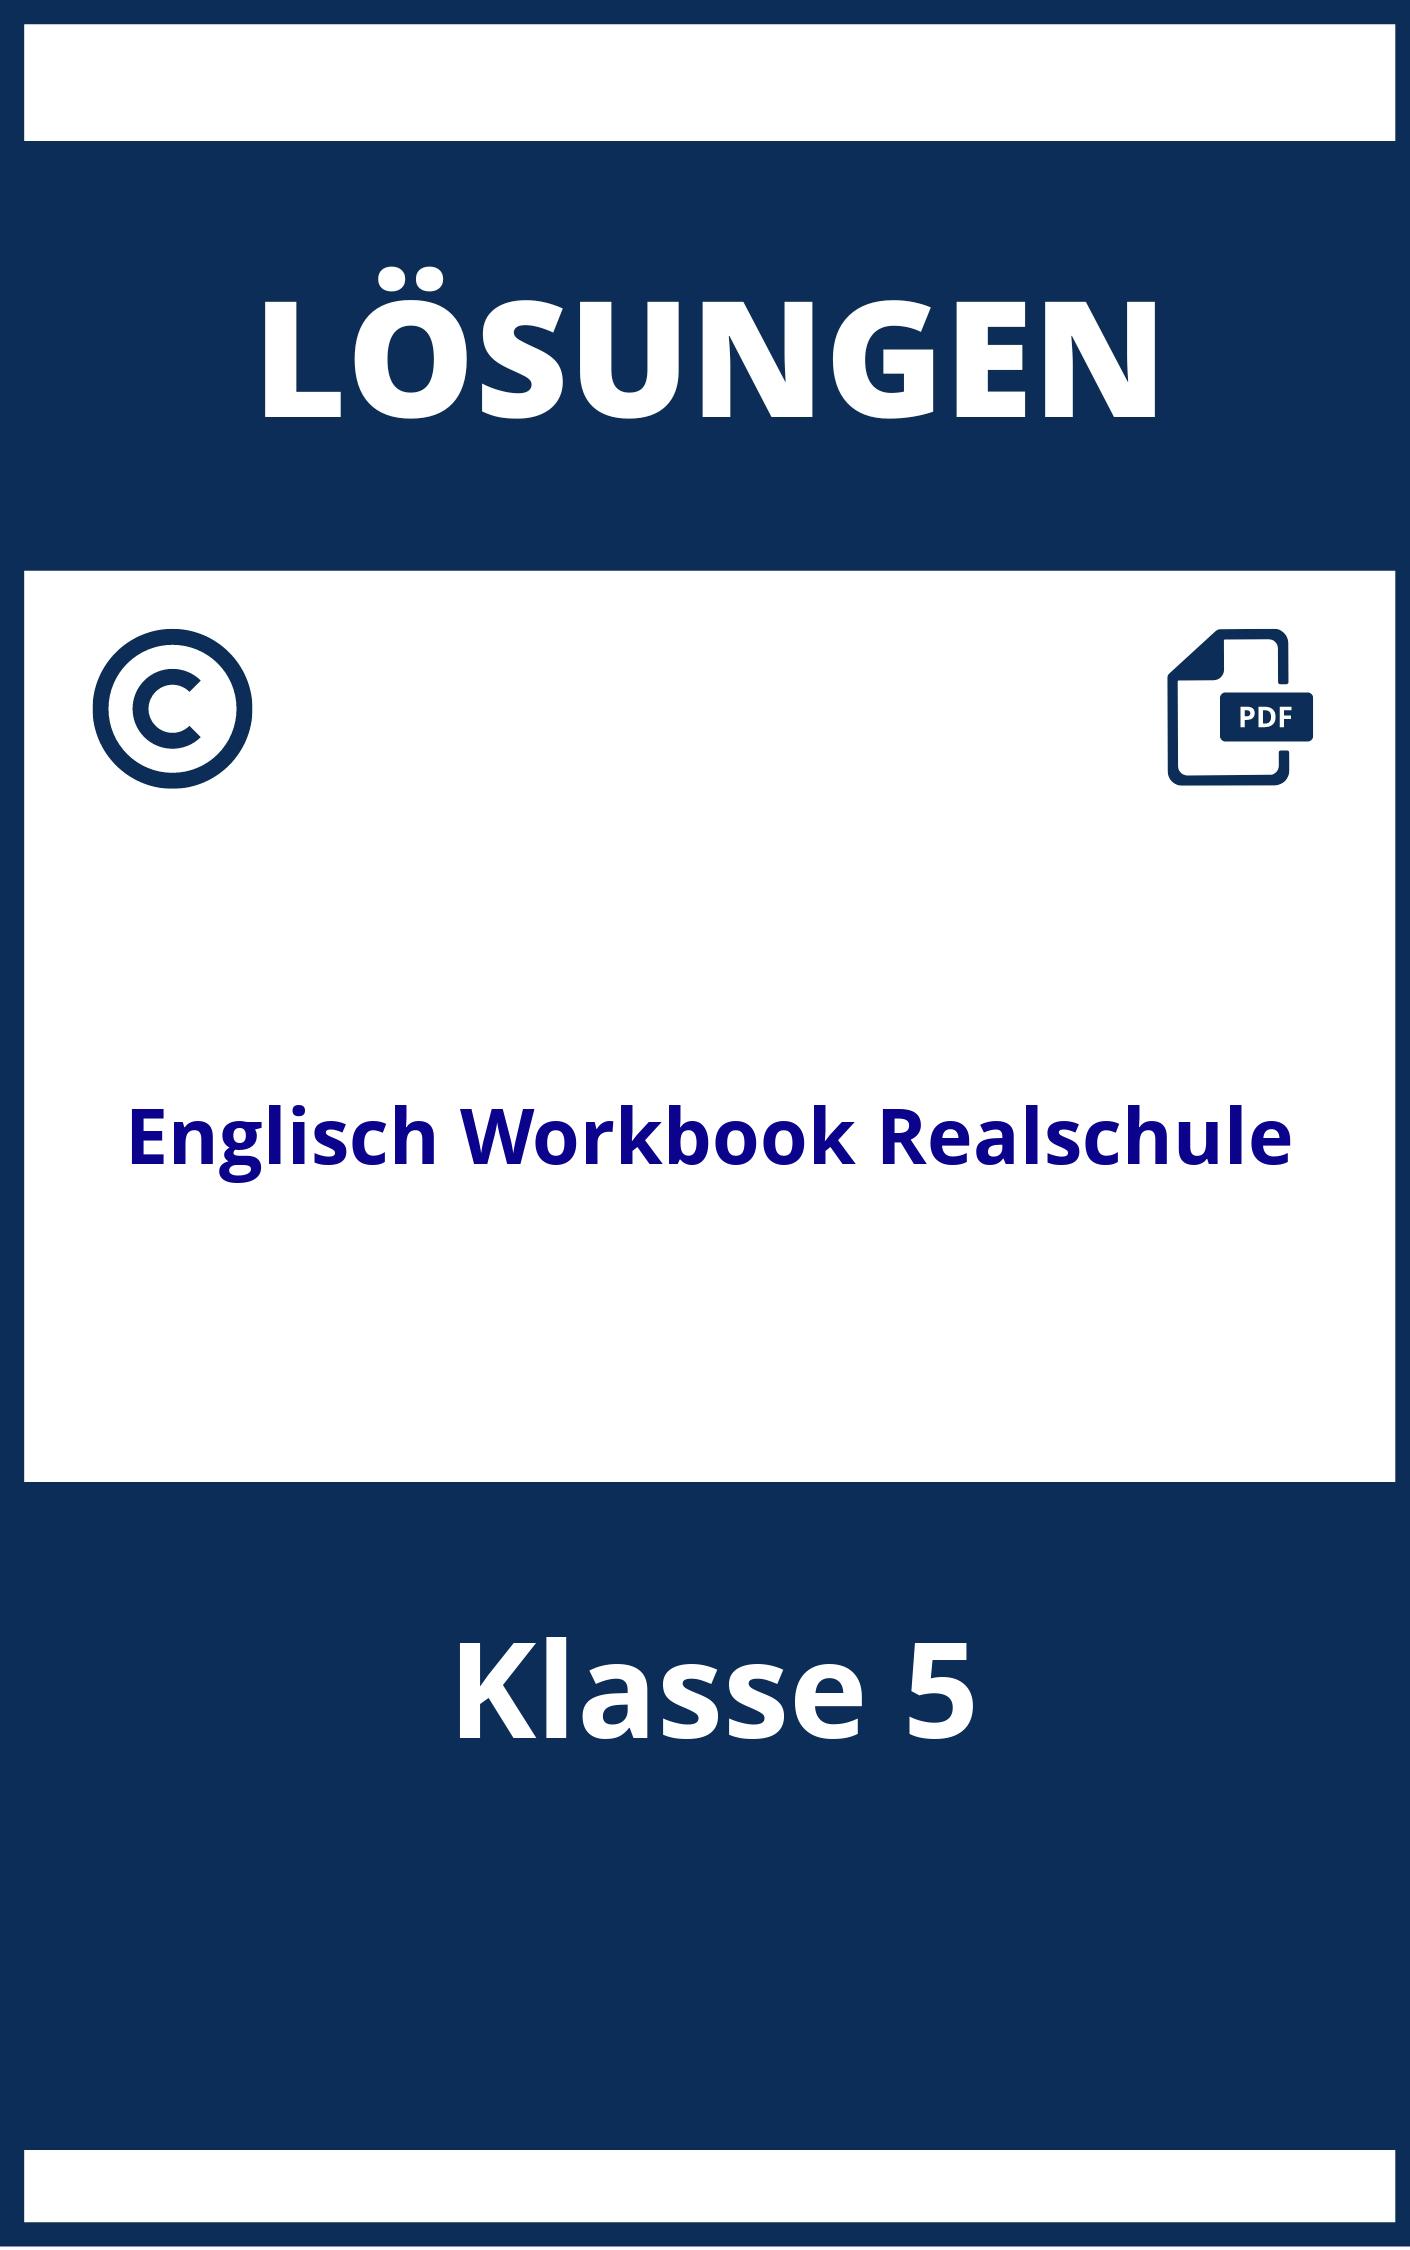 Englisch Workbook Lösungen Klasse 5 Realschule